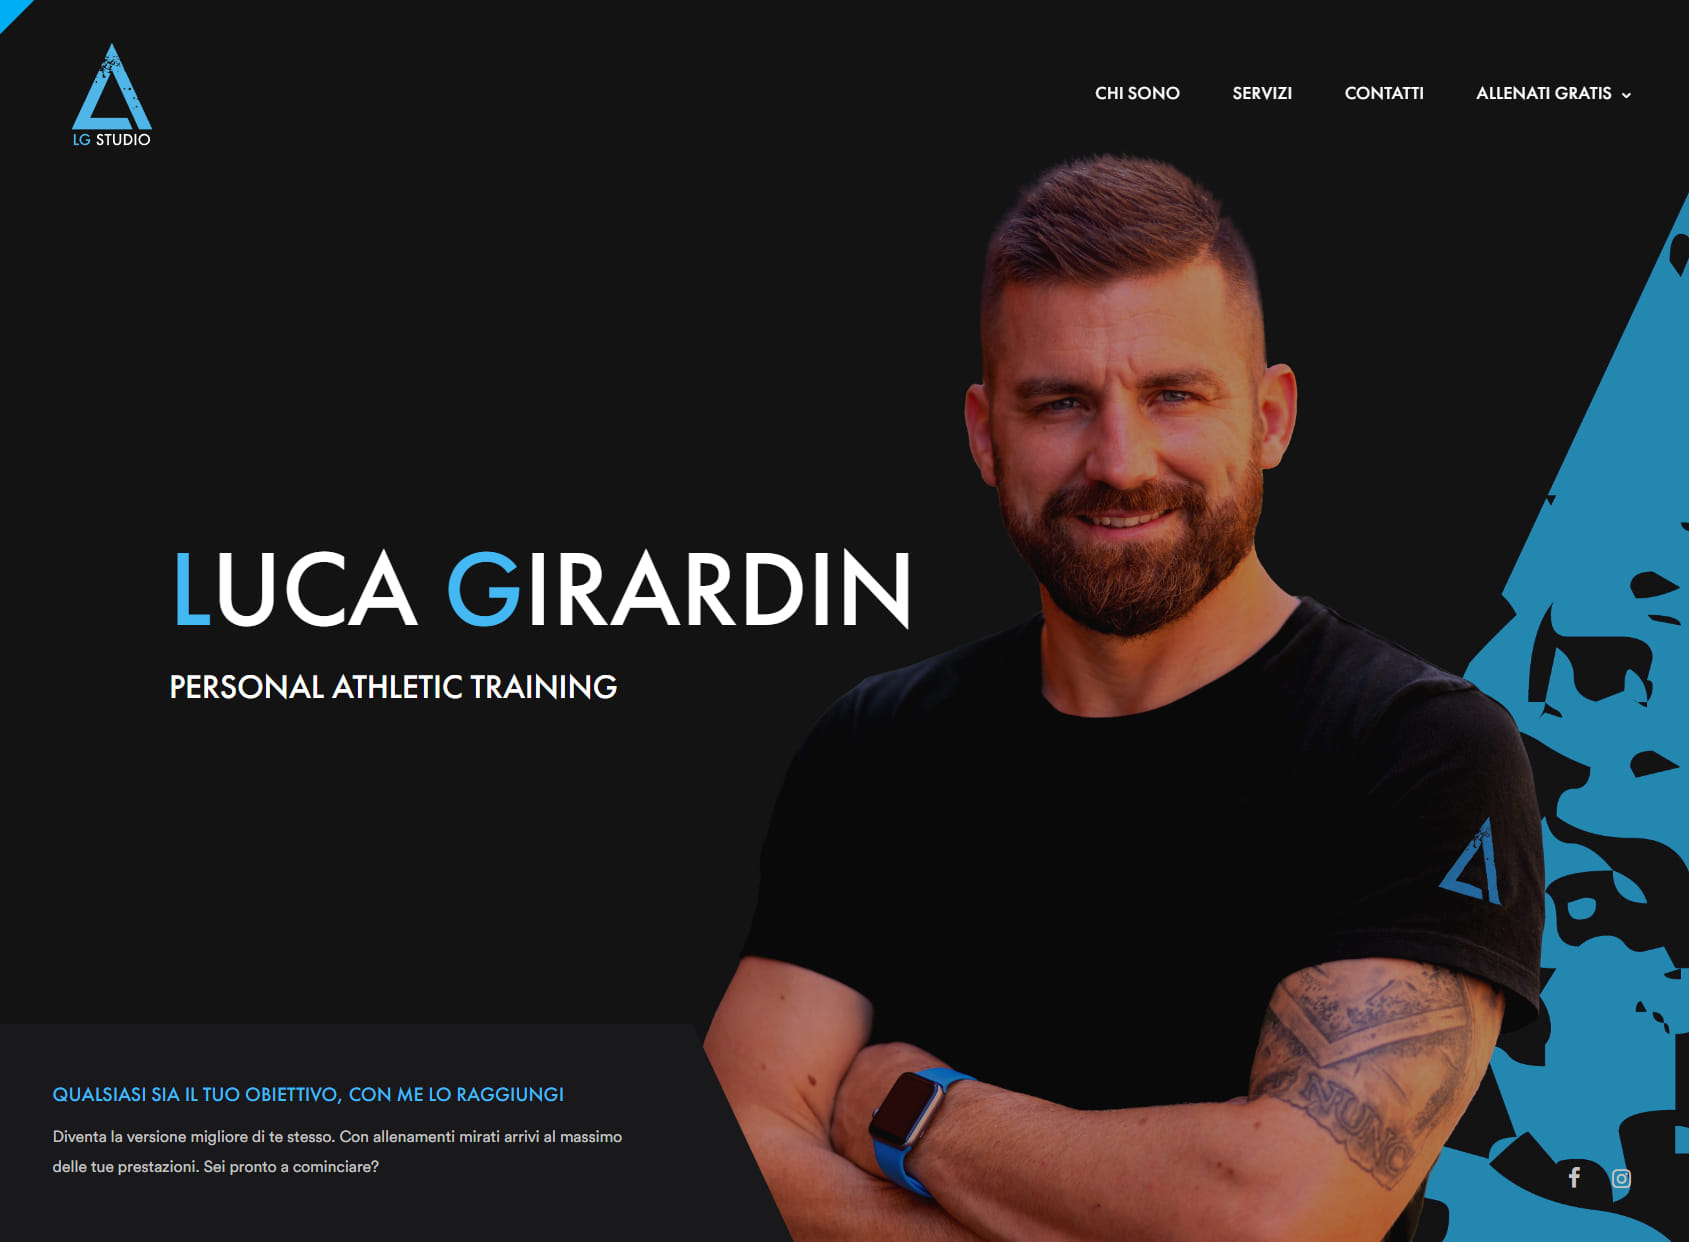 LG Studio | Luca Girardin Personal Athletic Training